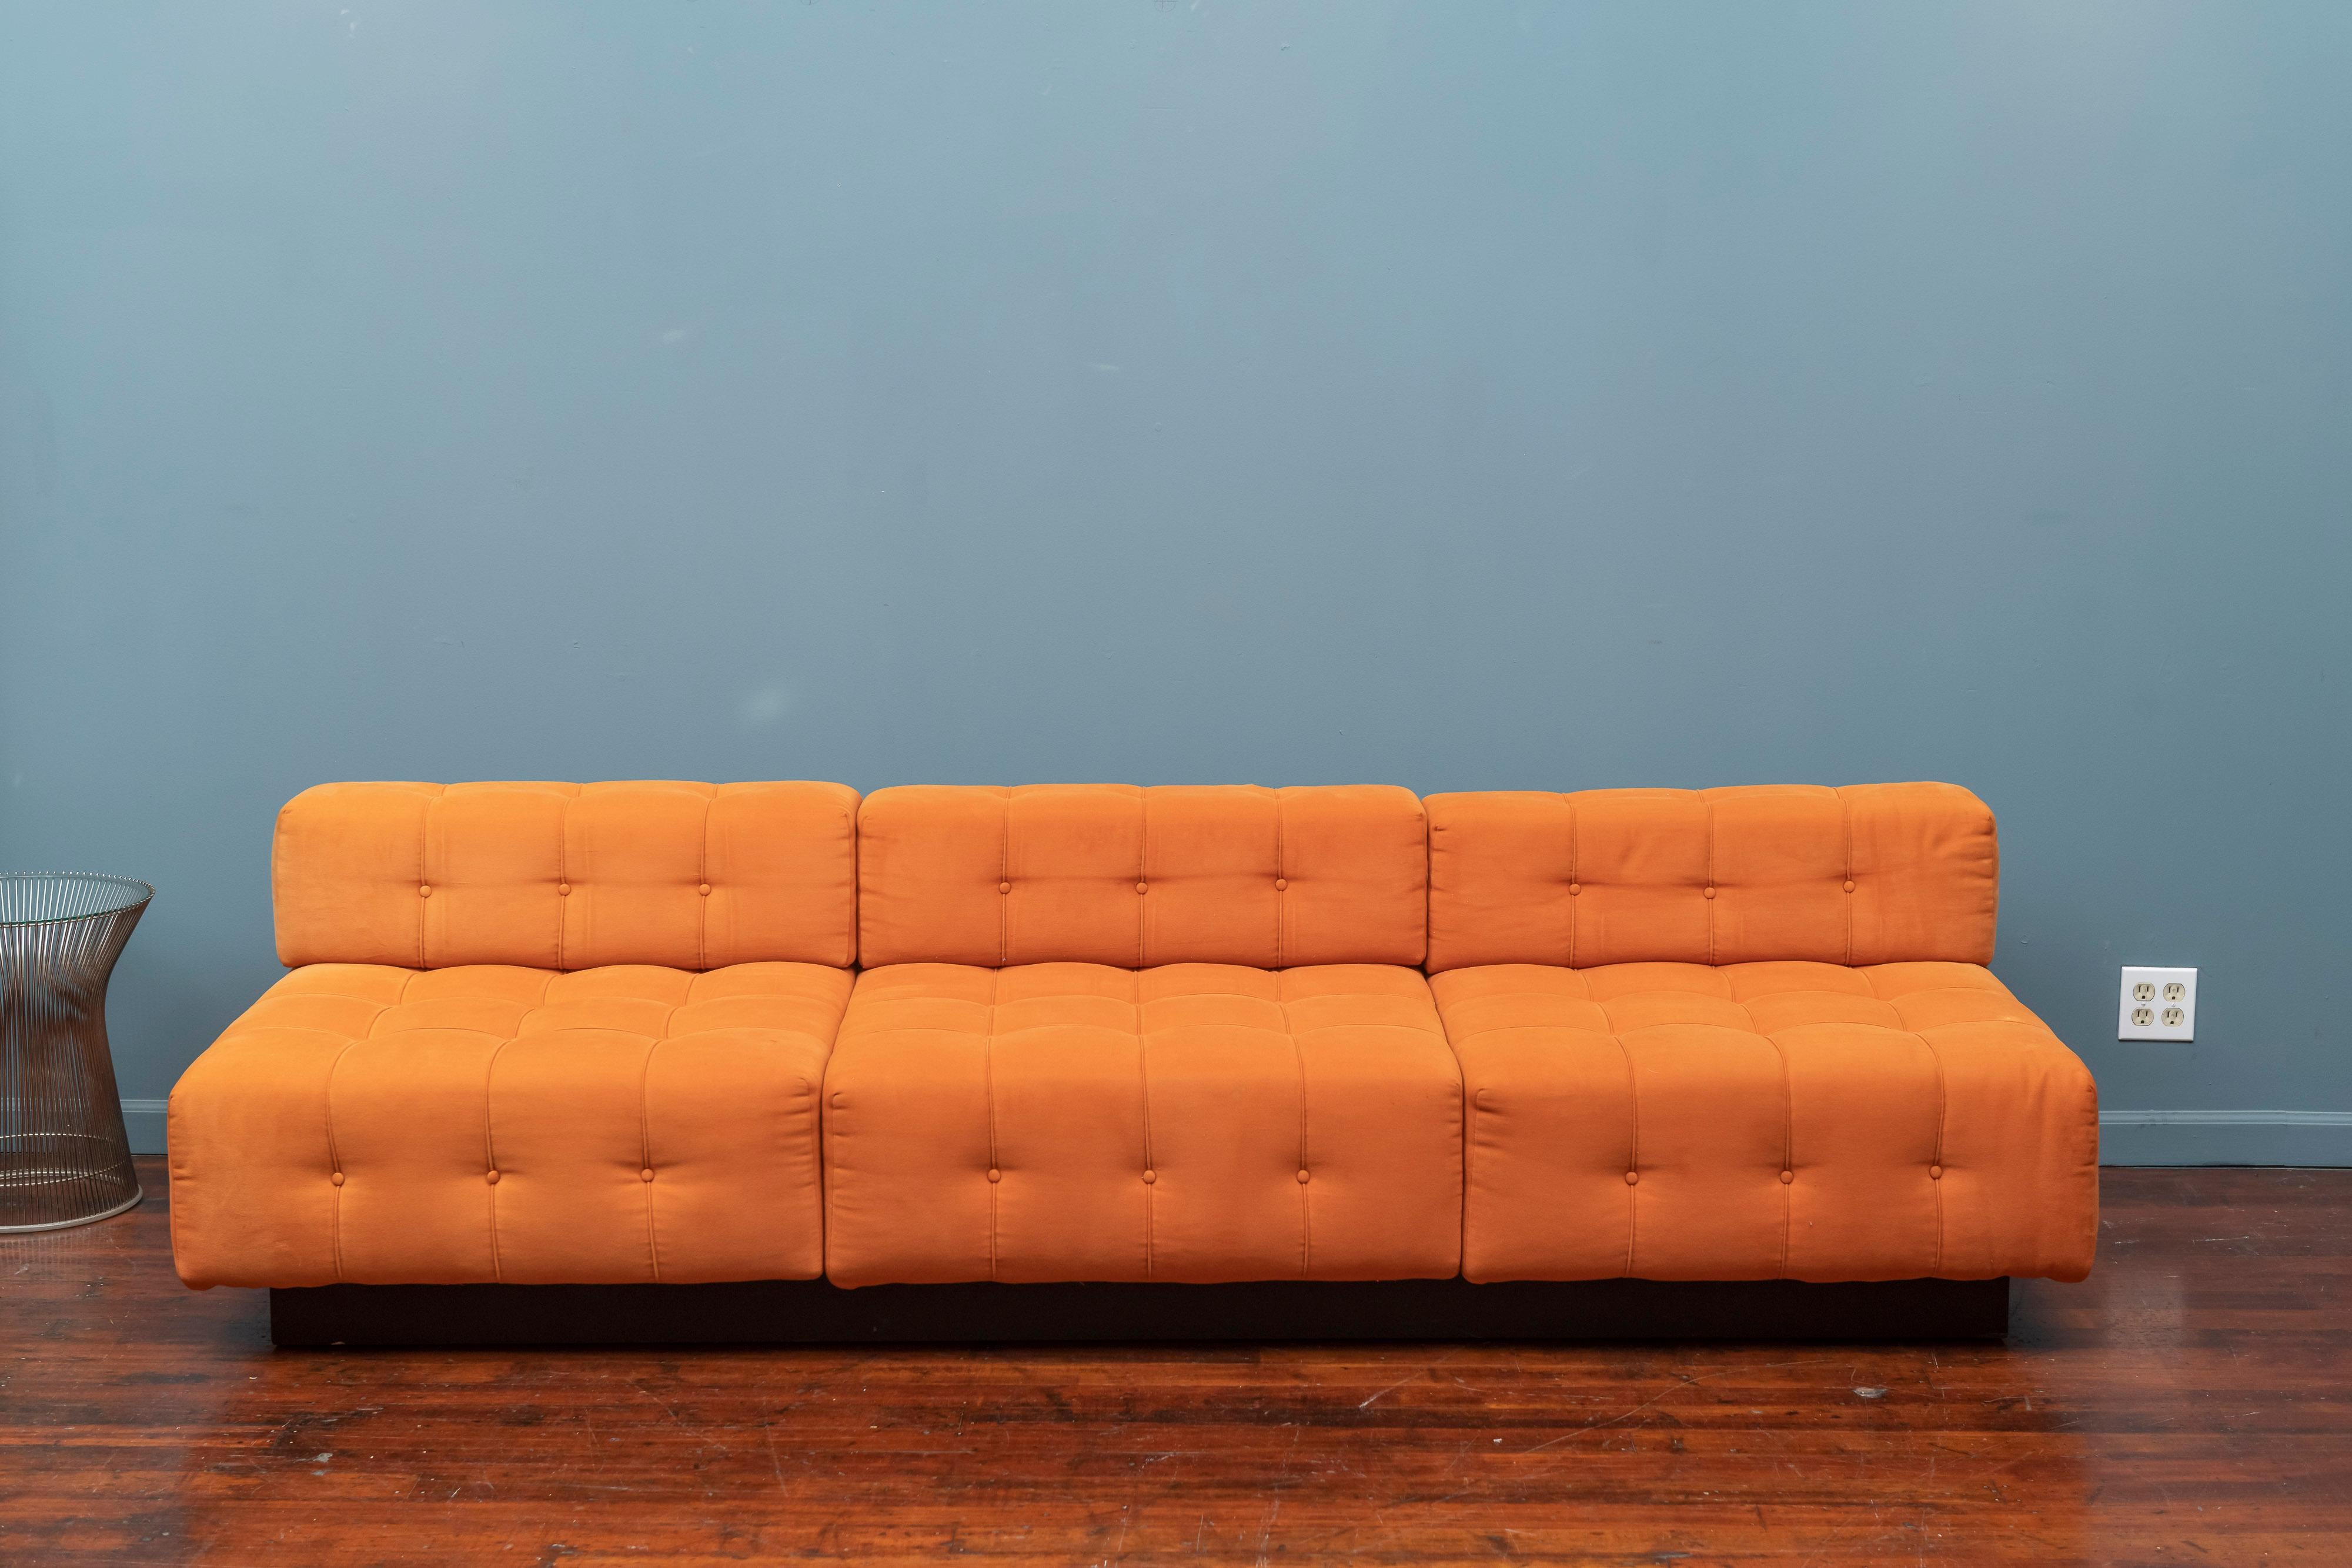 Mid-Century Modern Harvey Probber Cubo Sectional Sofa